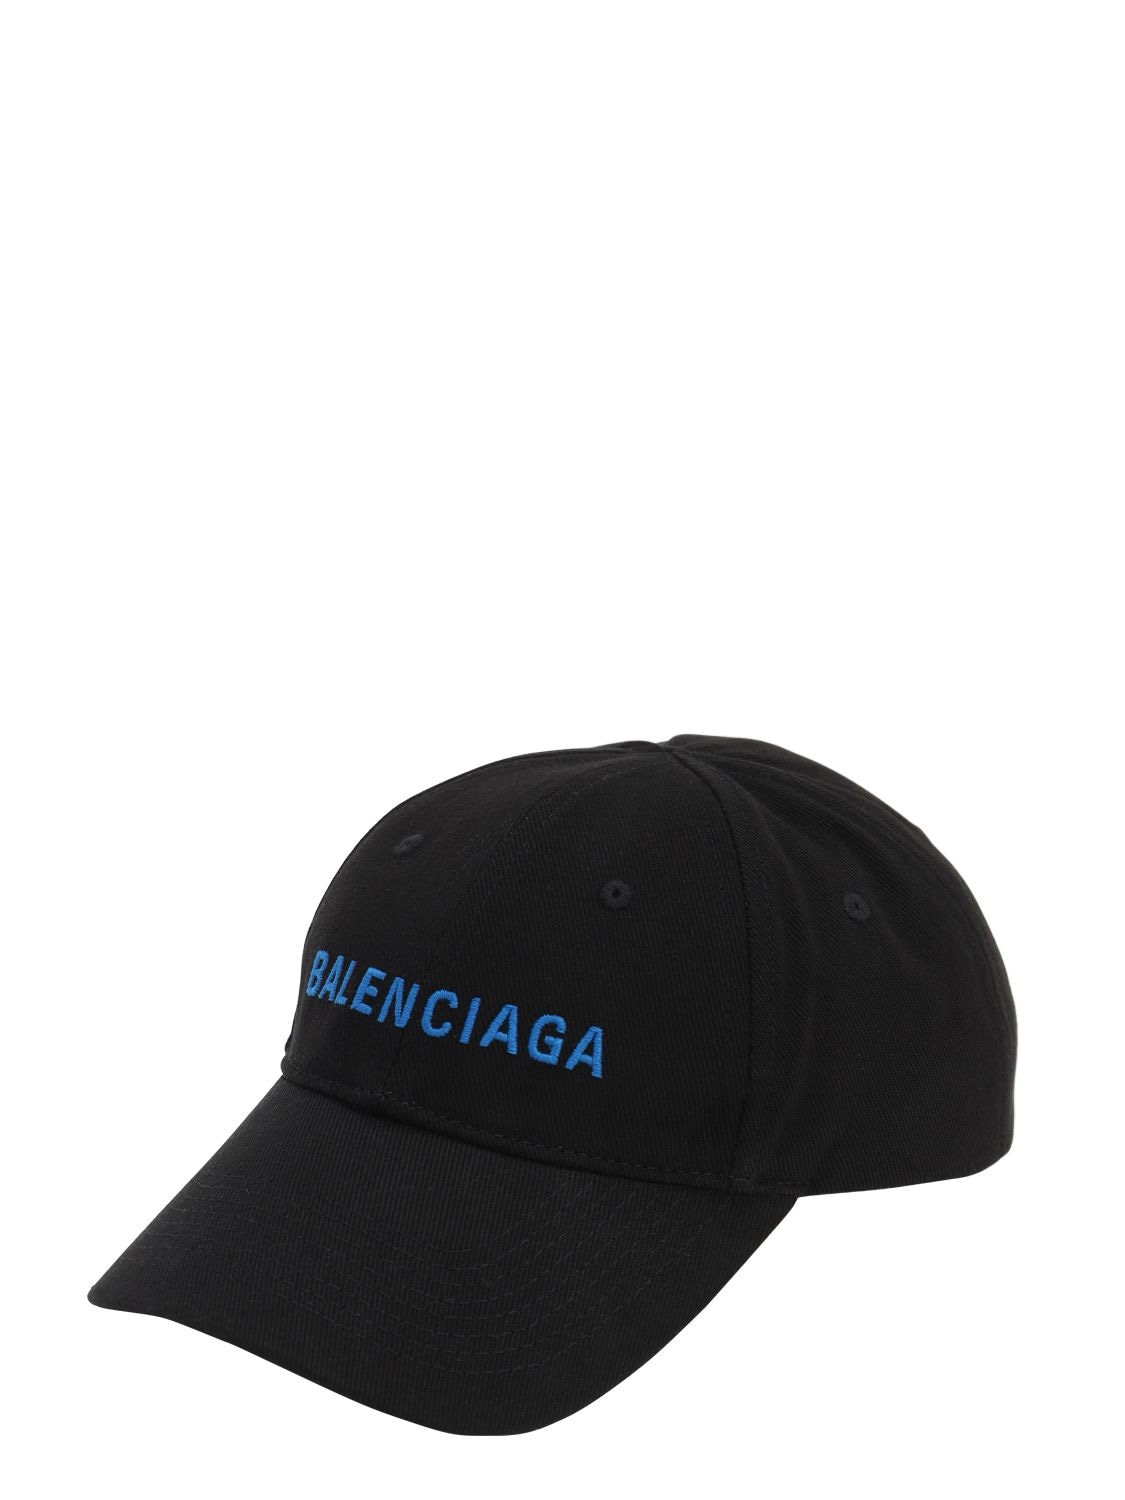 BALENCIAGA EMBROIDERED LOGO COTTON BASEBALL HAT,71IWD2059-MTA2OA2